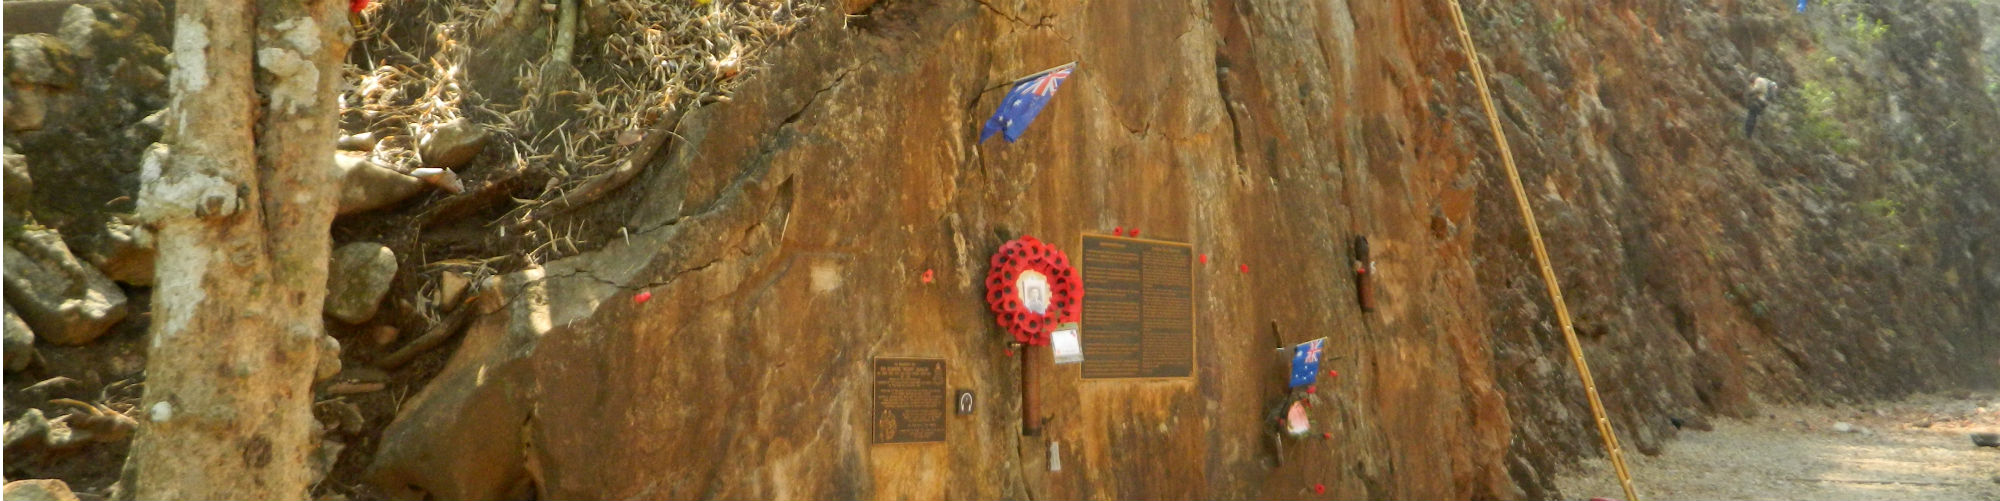 Hellfire Pass Memorial Site, Sai Yok District, Kanchanaburi Province